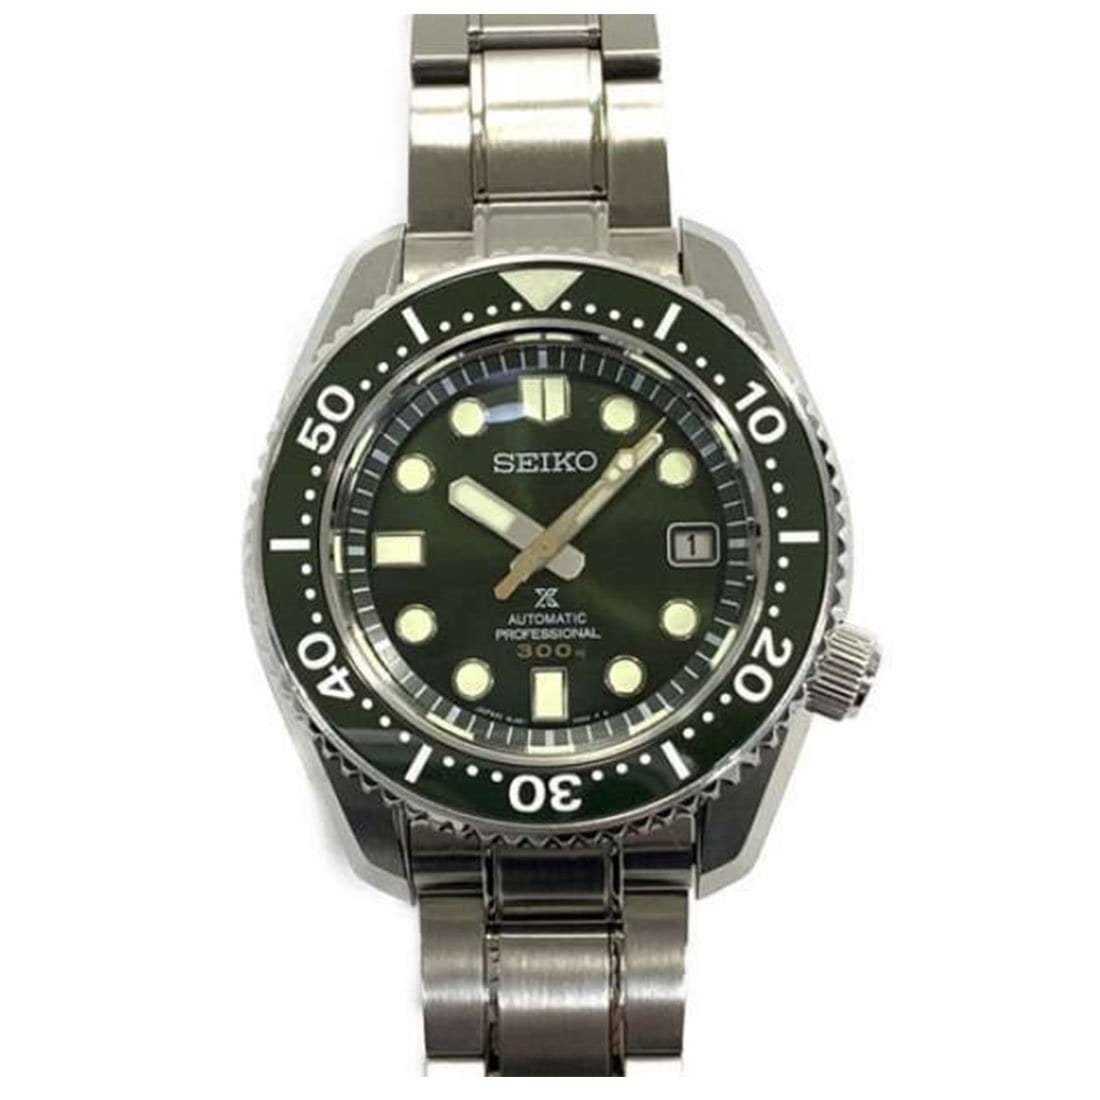 Seiko SLA019 SBDX021 Forest Green Marinemaster Watch